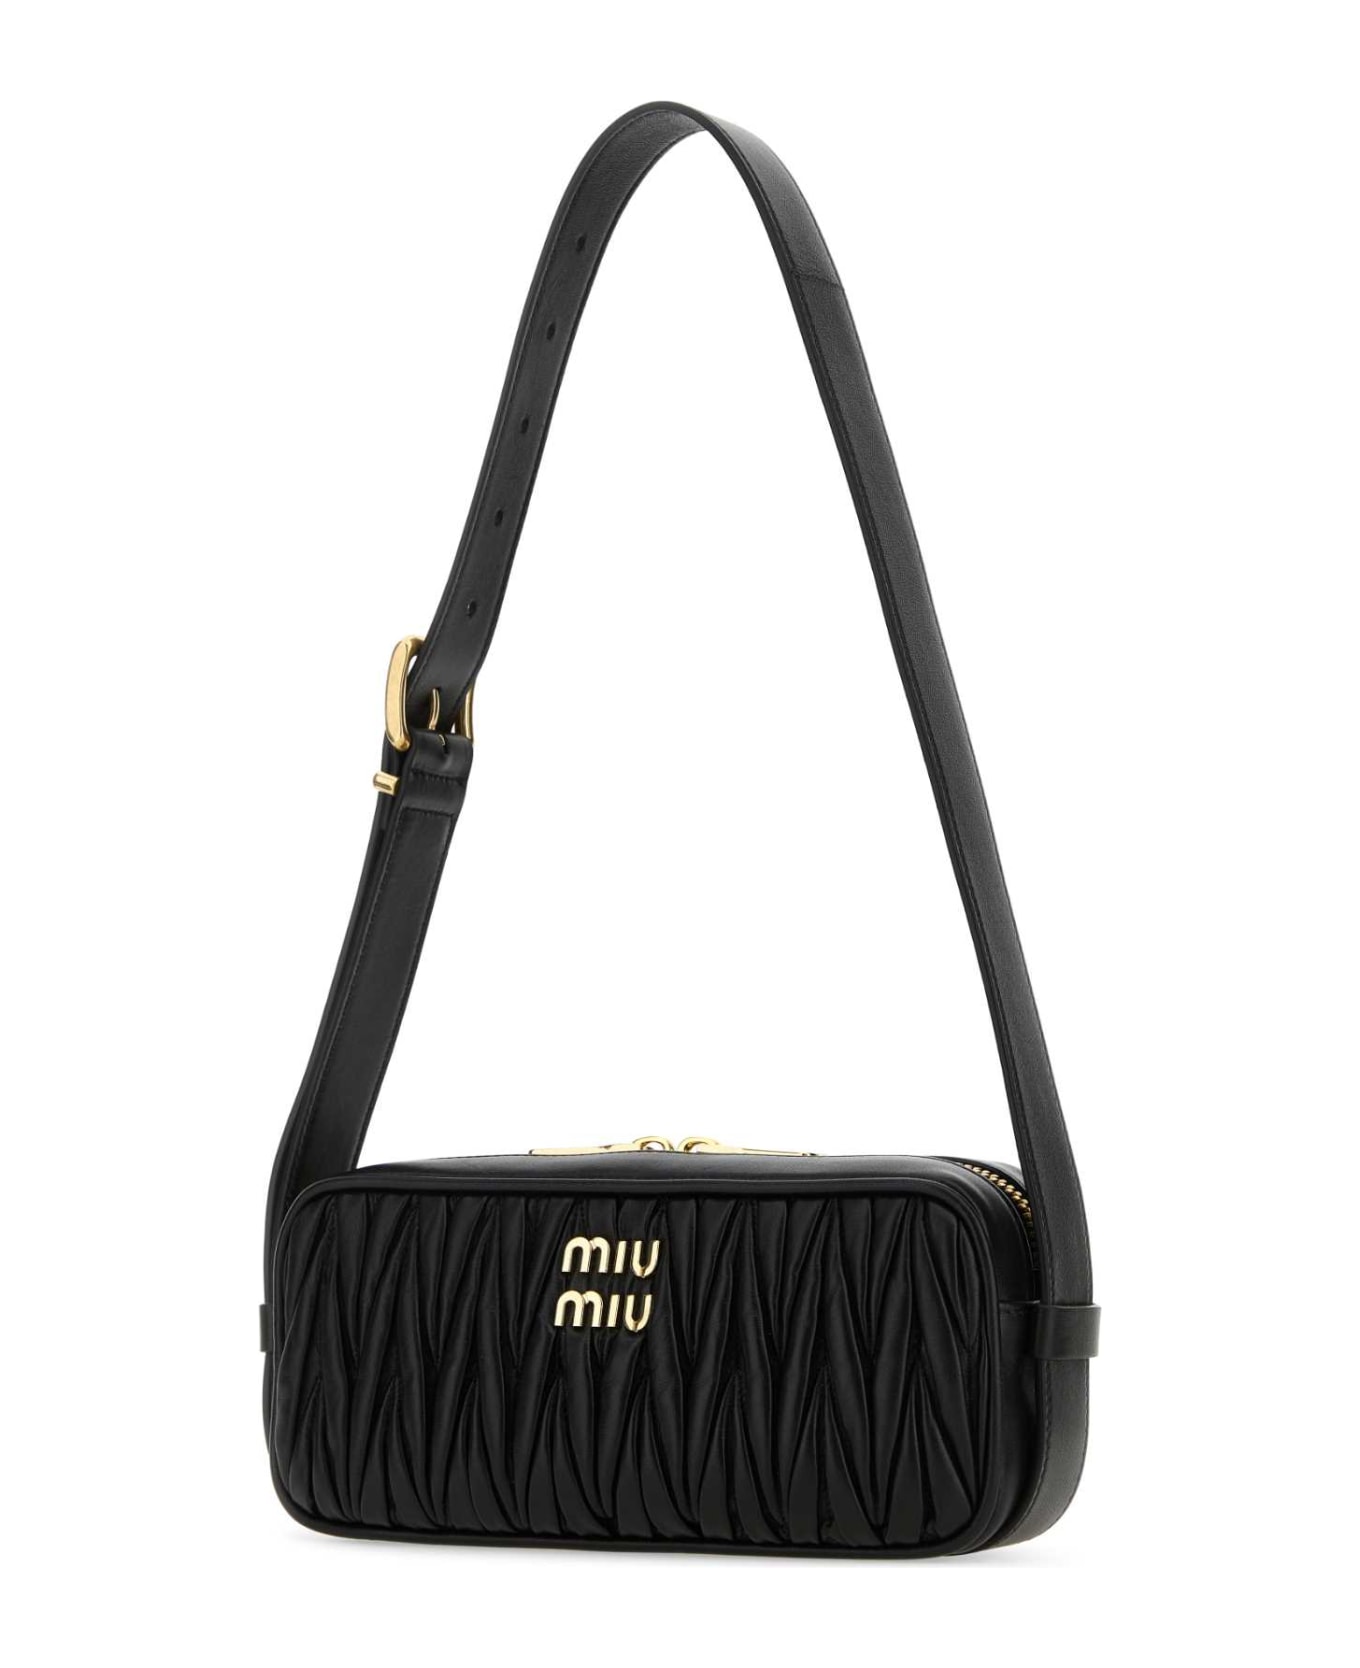 Miu Miu Black Nappa Leather Shoulder Bag - NERO